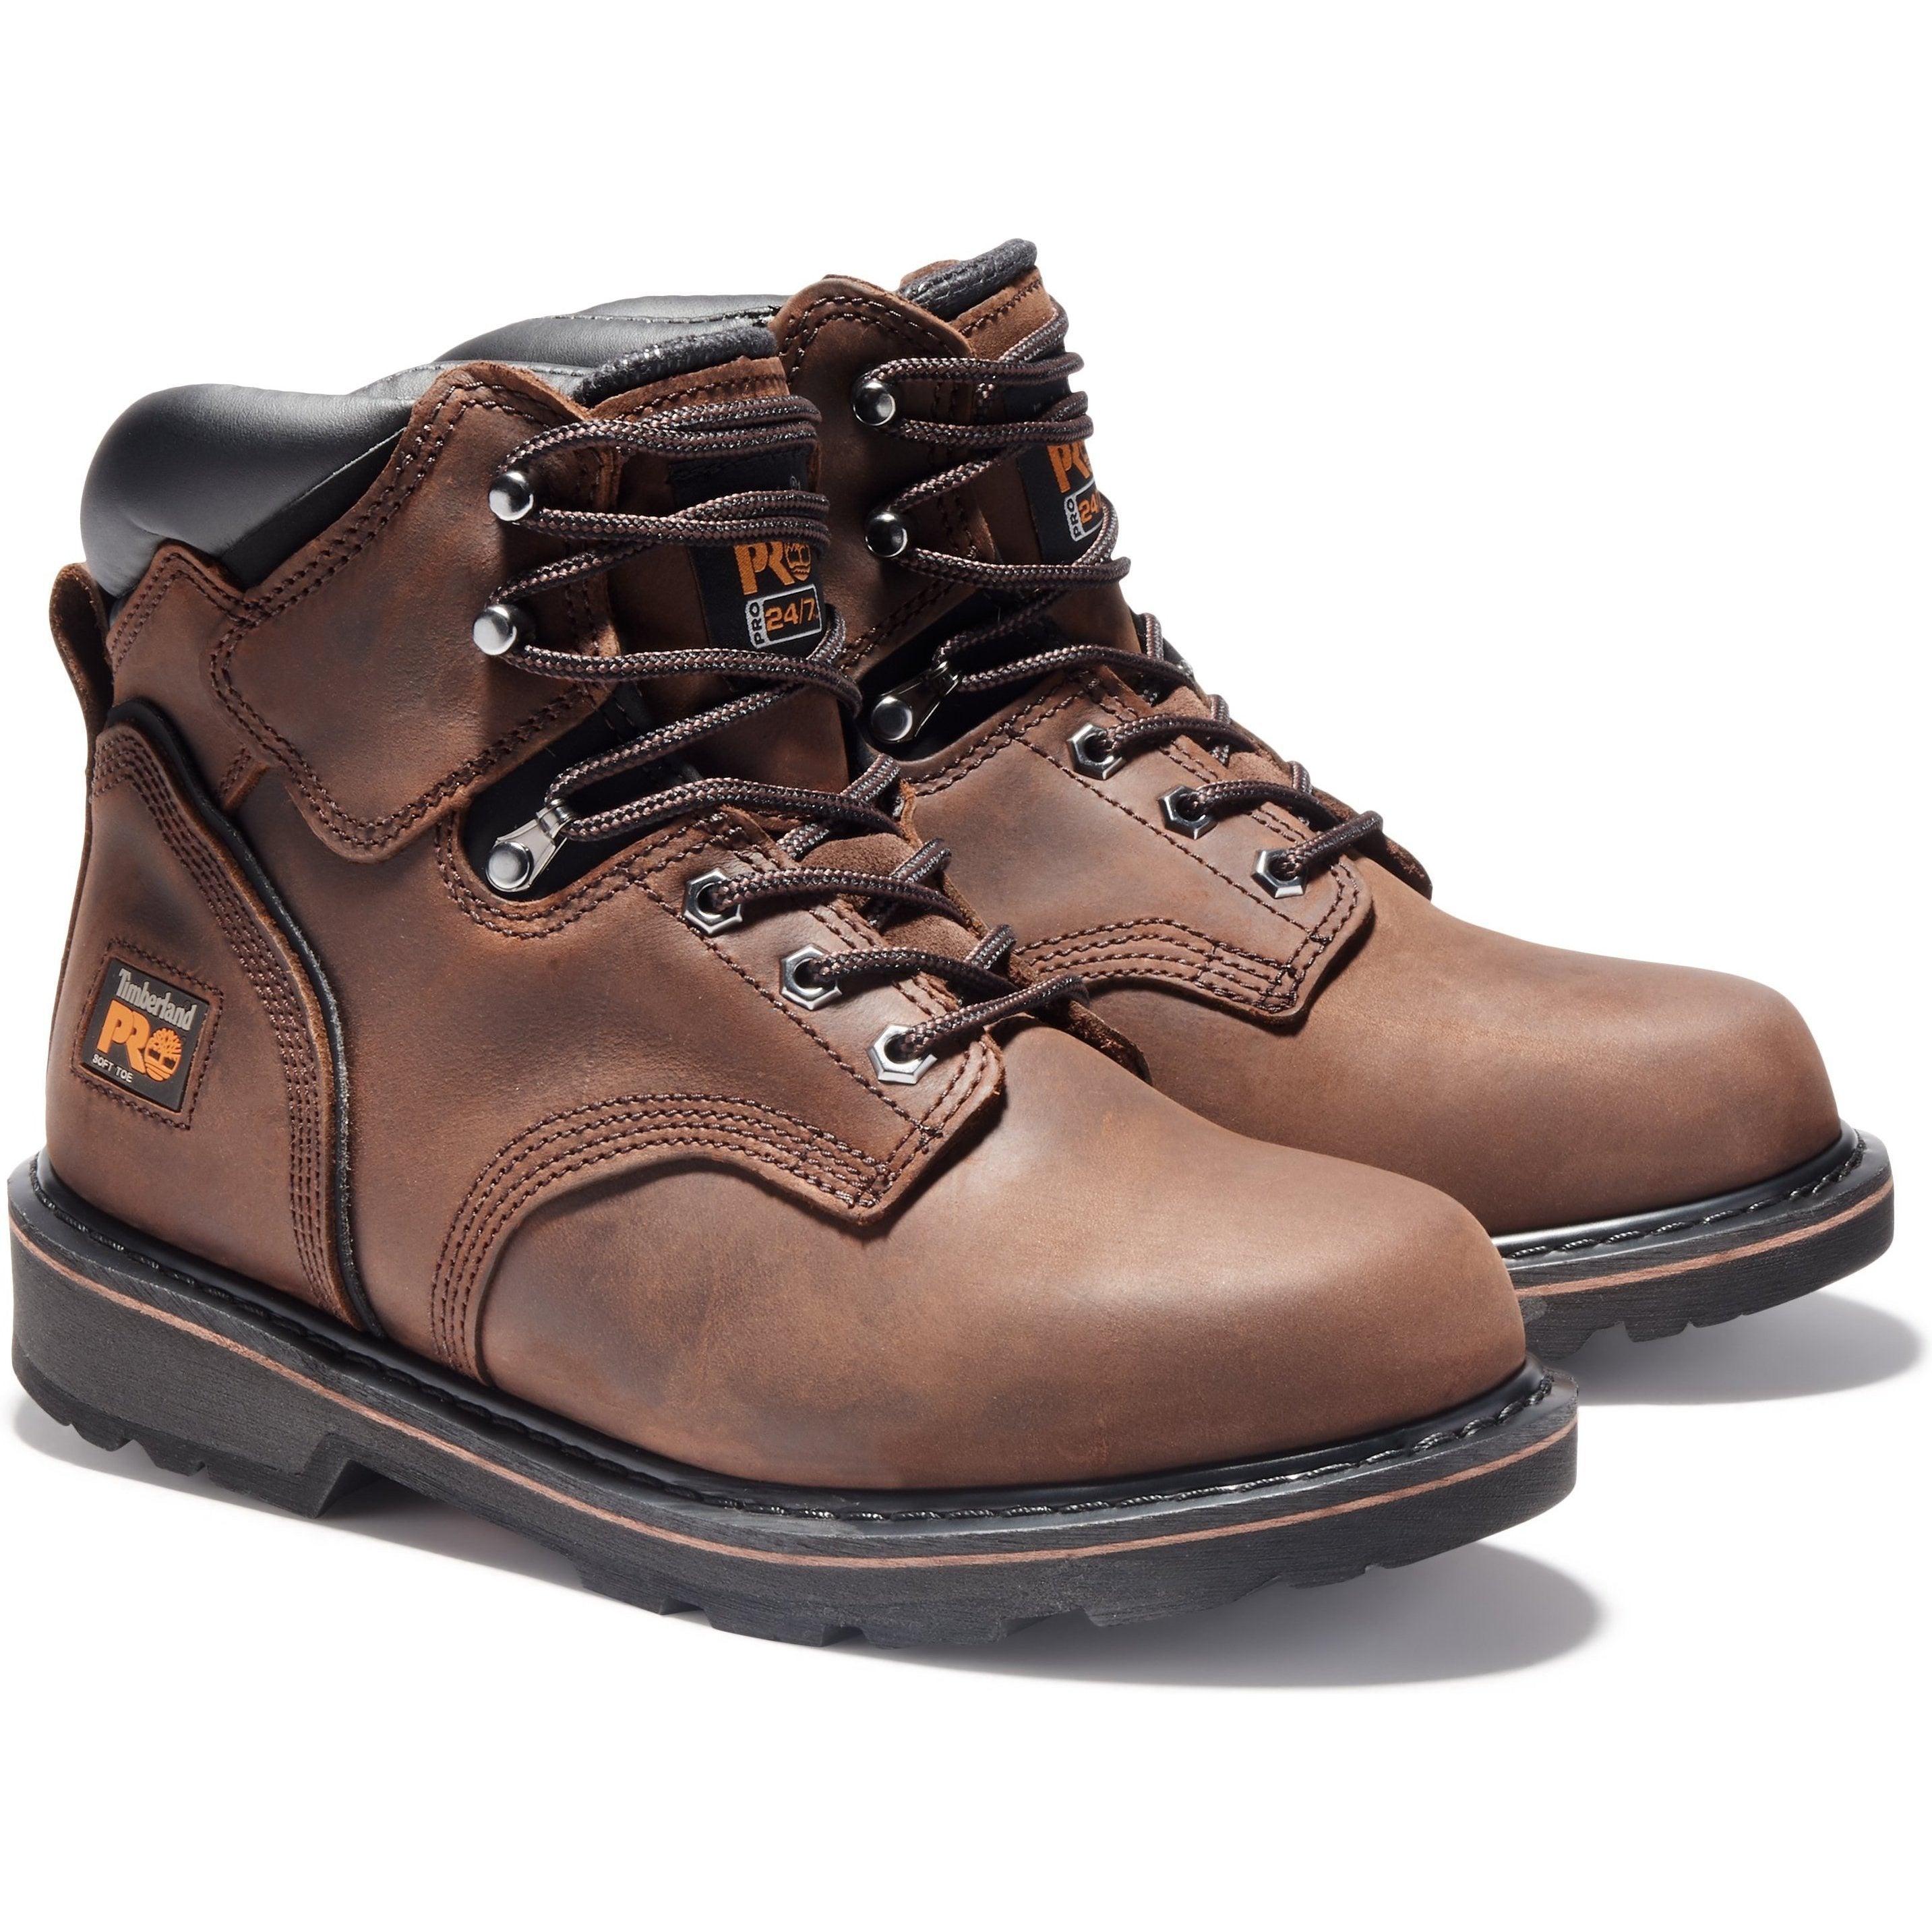 Timberland PRO Men's Pit Boss 6" Soft Toe Work Boots Brown TB133046214 7 / Medium / Brown - Overlook Boots